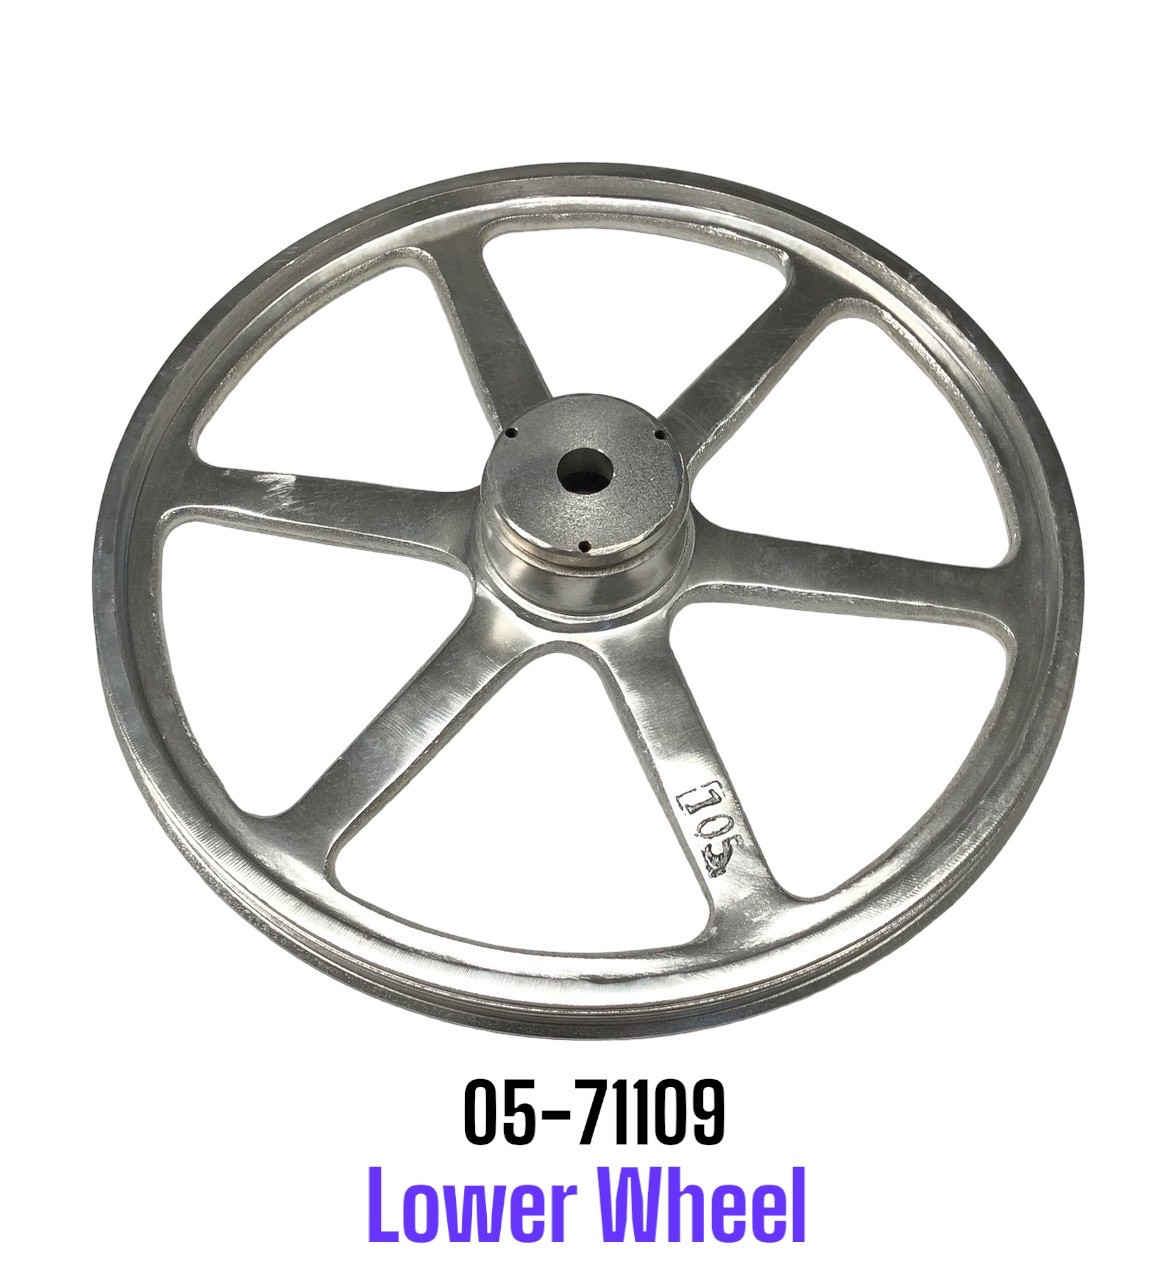 TorRey ST-295AI & ST-305AI - Lower Wheel - 05-71109